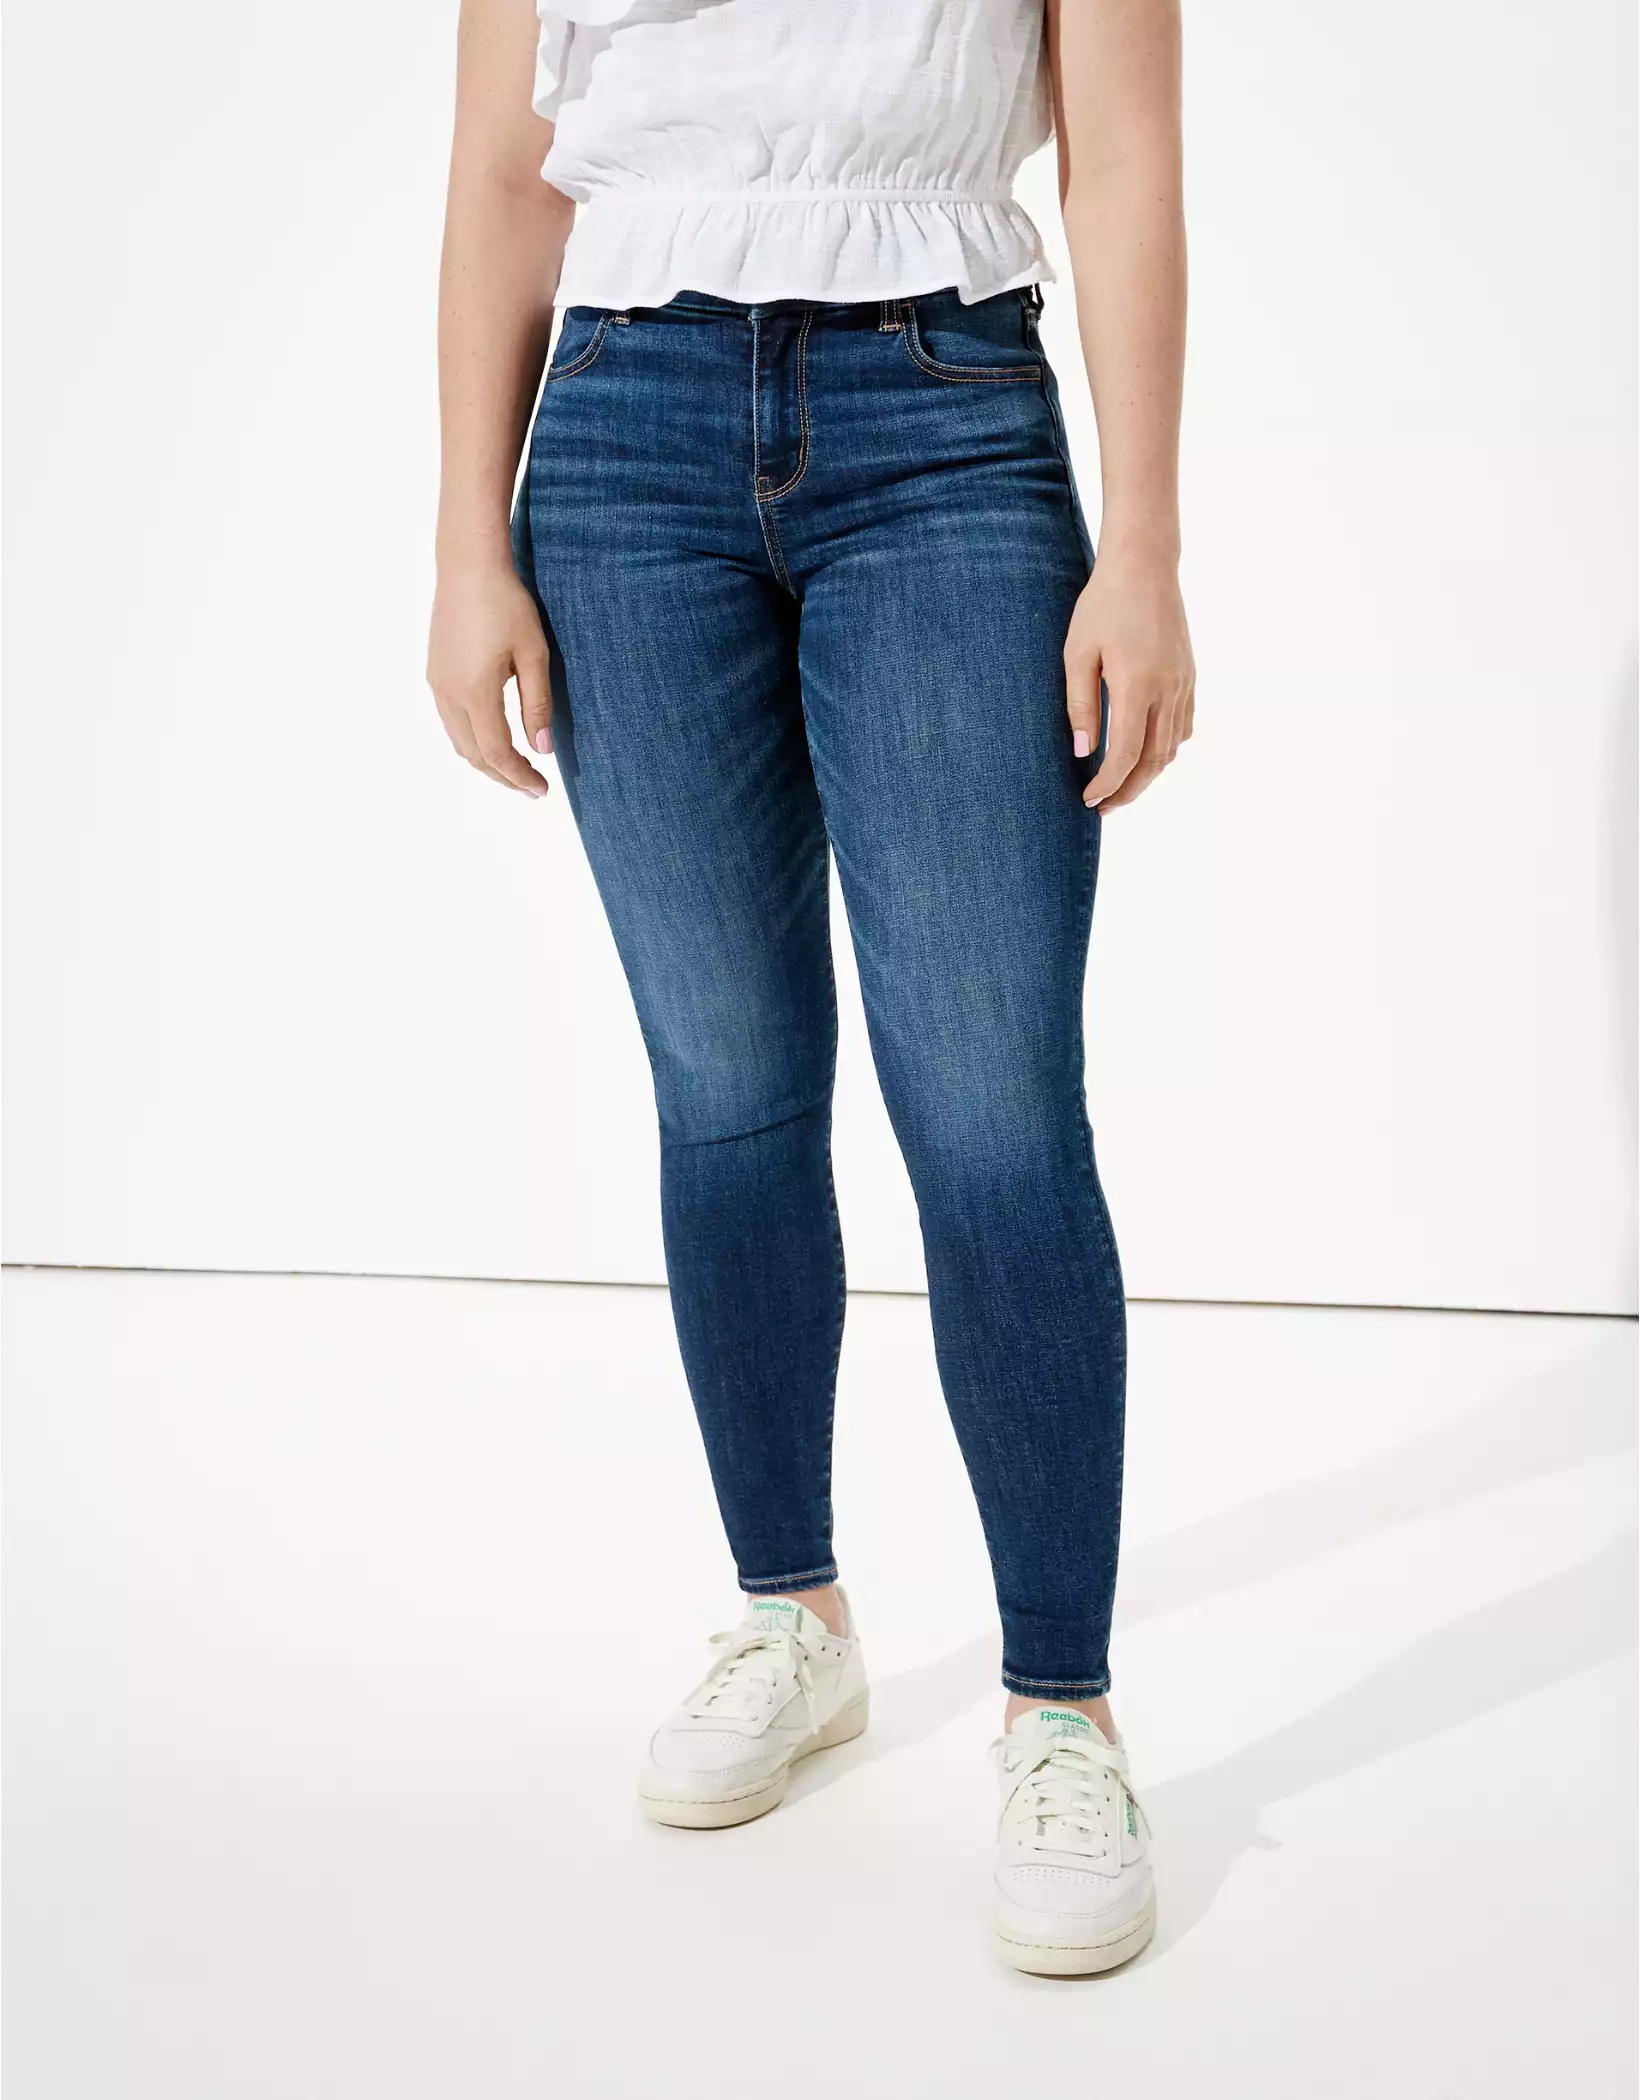 meer een experiment doen Uittreksel 14 of the Best Jeggings That Look Like Jeans in 2023 | Well+Good